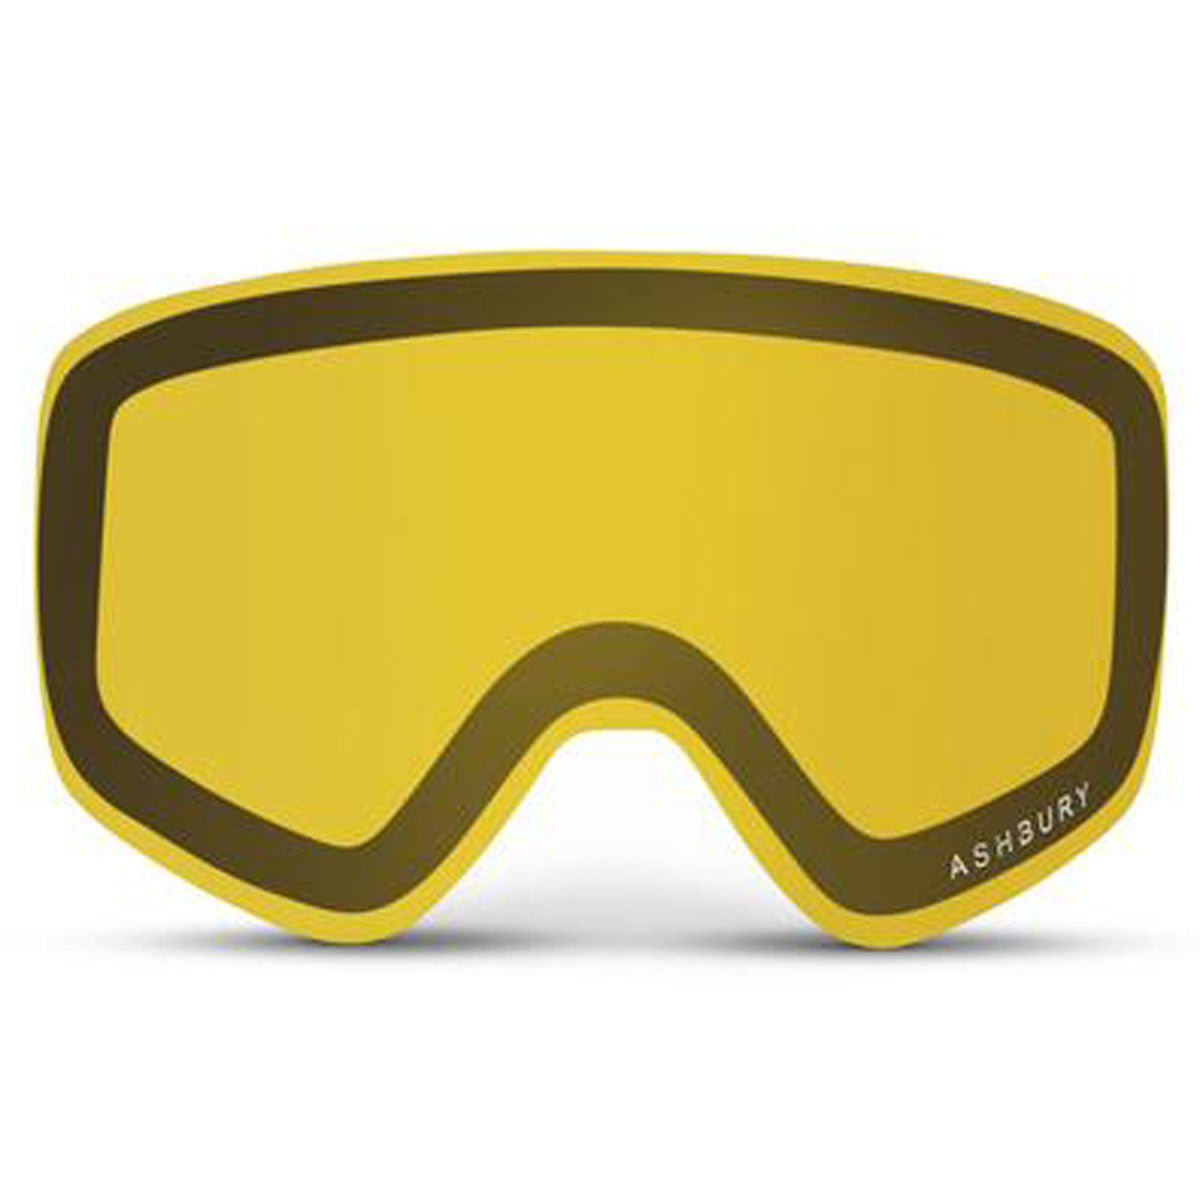 Ashbury Sonic White Triangle Snowboard Goggles - Dark Smoke/Yellow Spare image 3